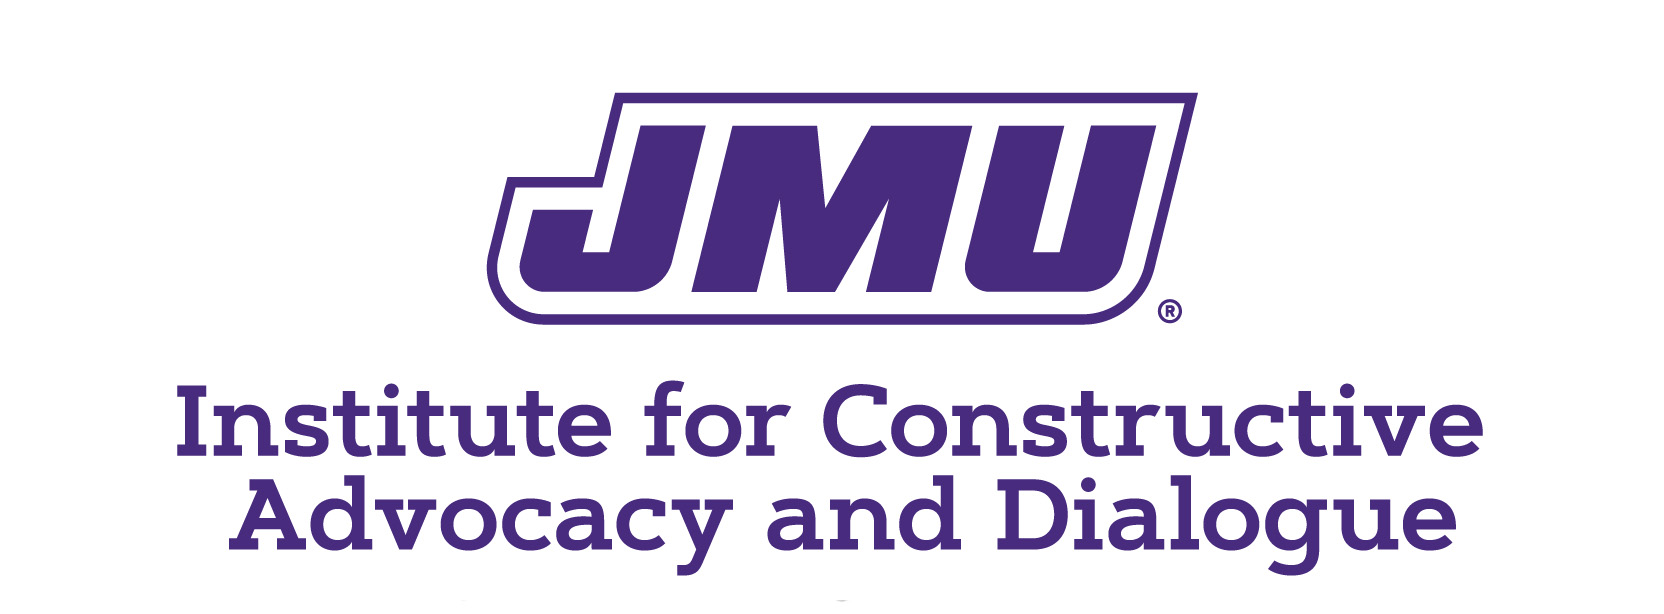 JMU-Institute-for-Constructive-Advocacy-and-Dialogue-vert-purple.jpg